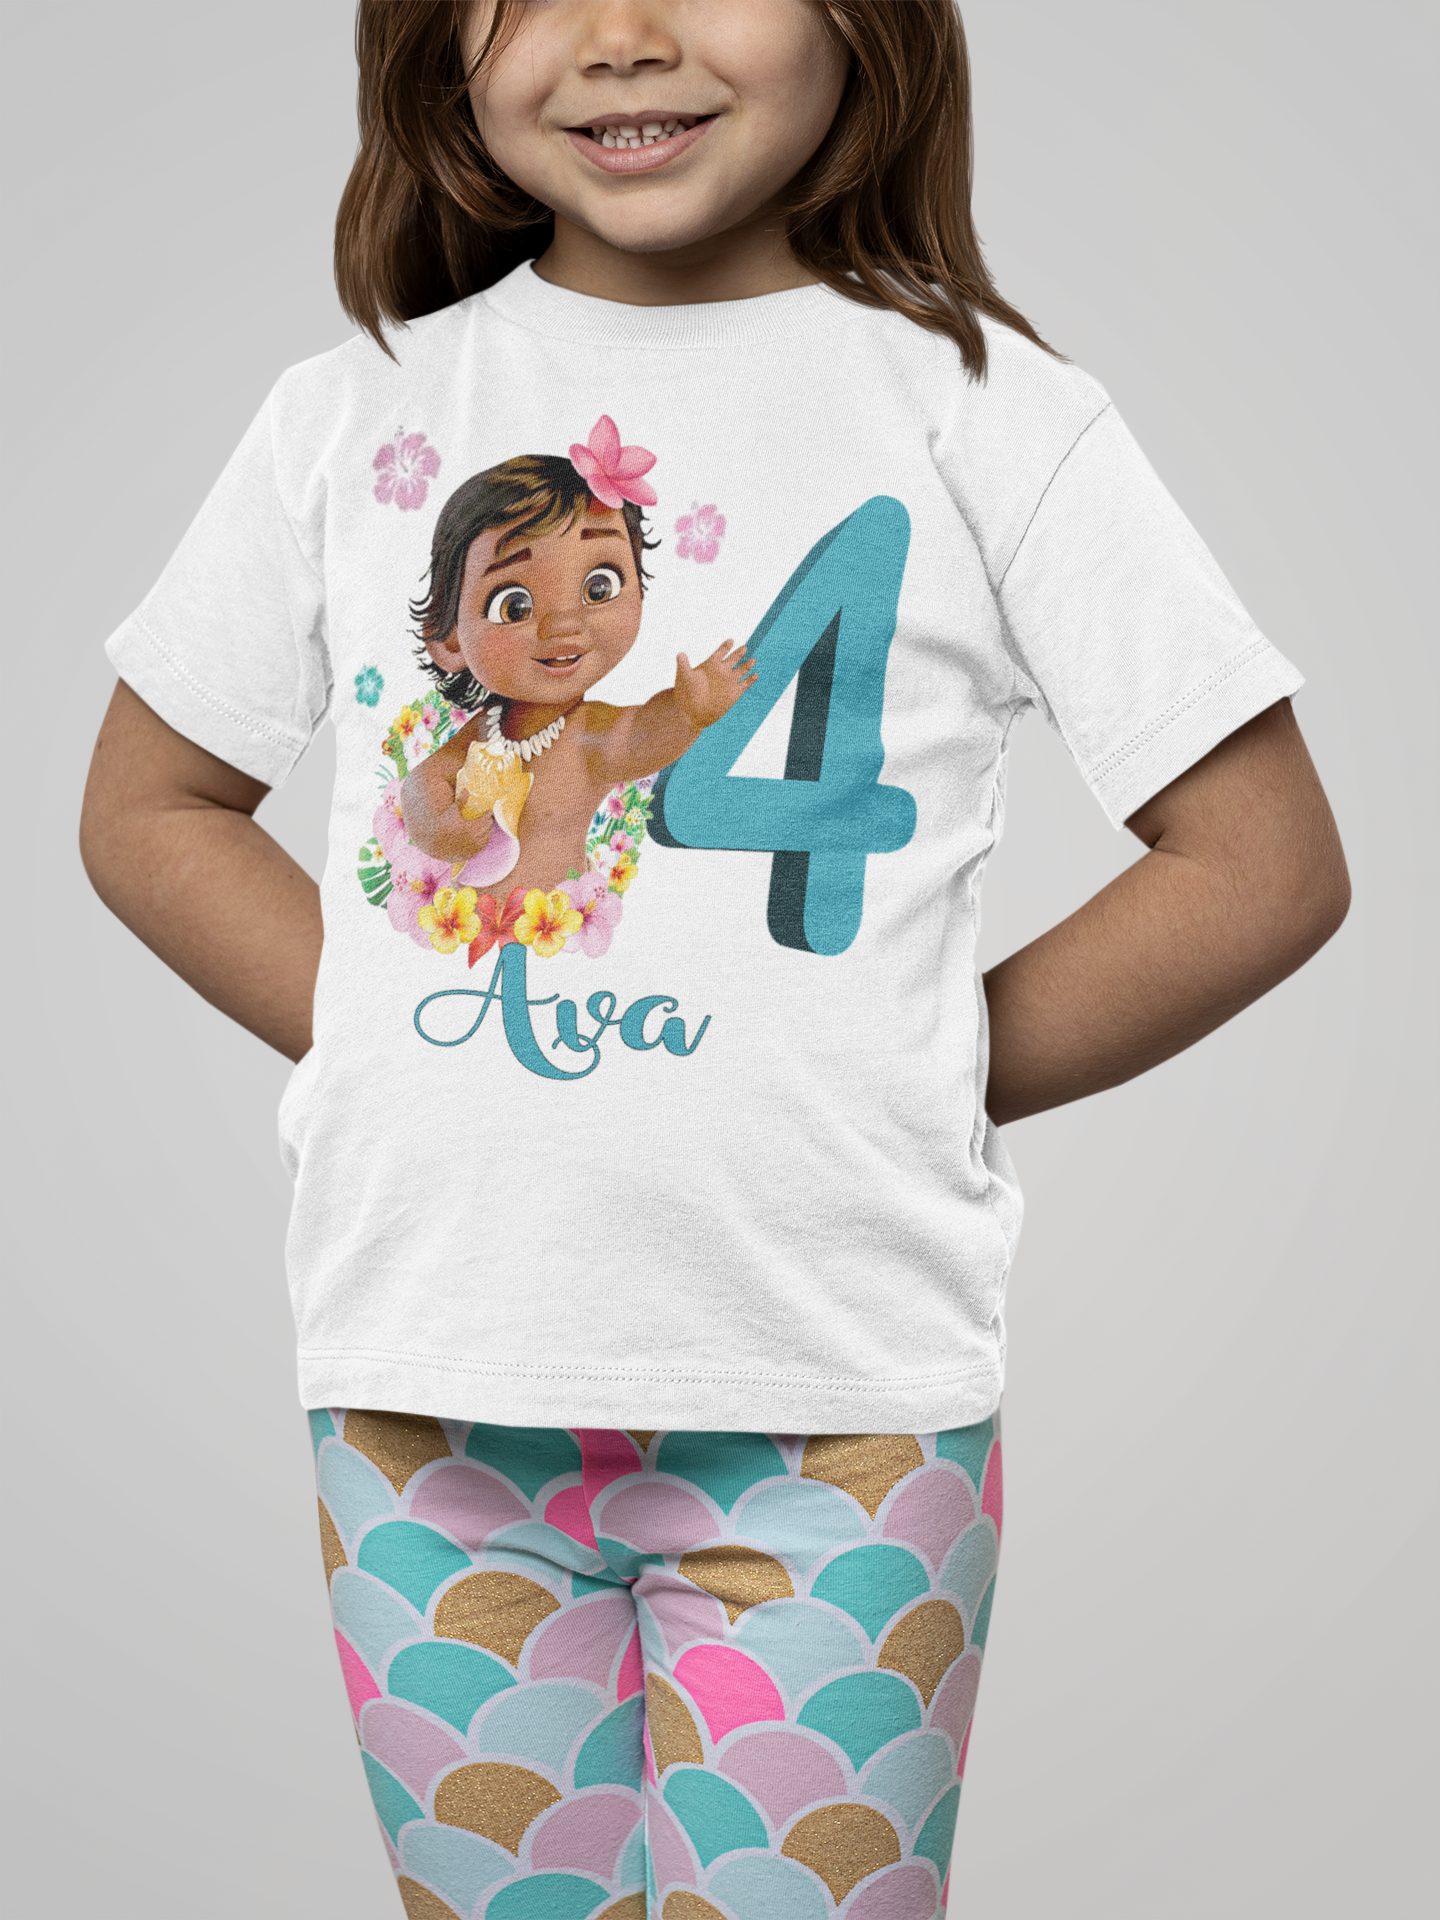 Baby Moana Girl shirts-  Baby  Moana shirt - Personalized Moana shirt -  Toddler baby Moana shirts  - Personalized shirts - Custom shirts